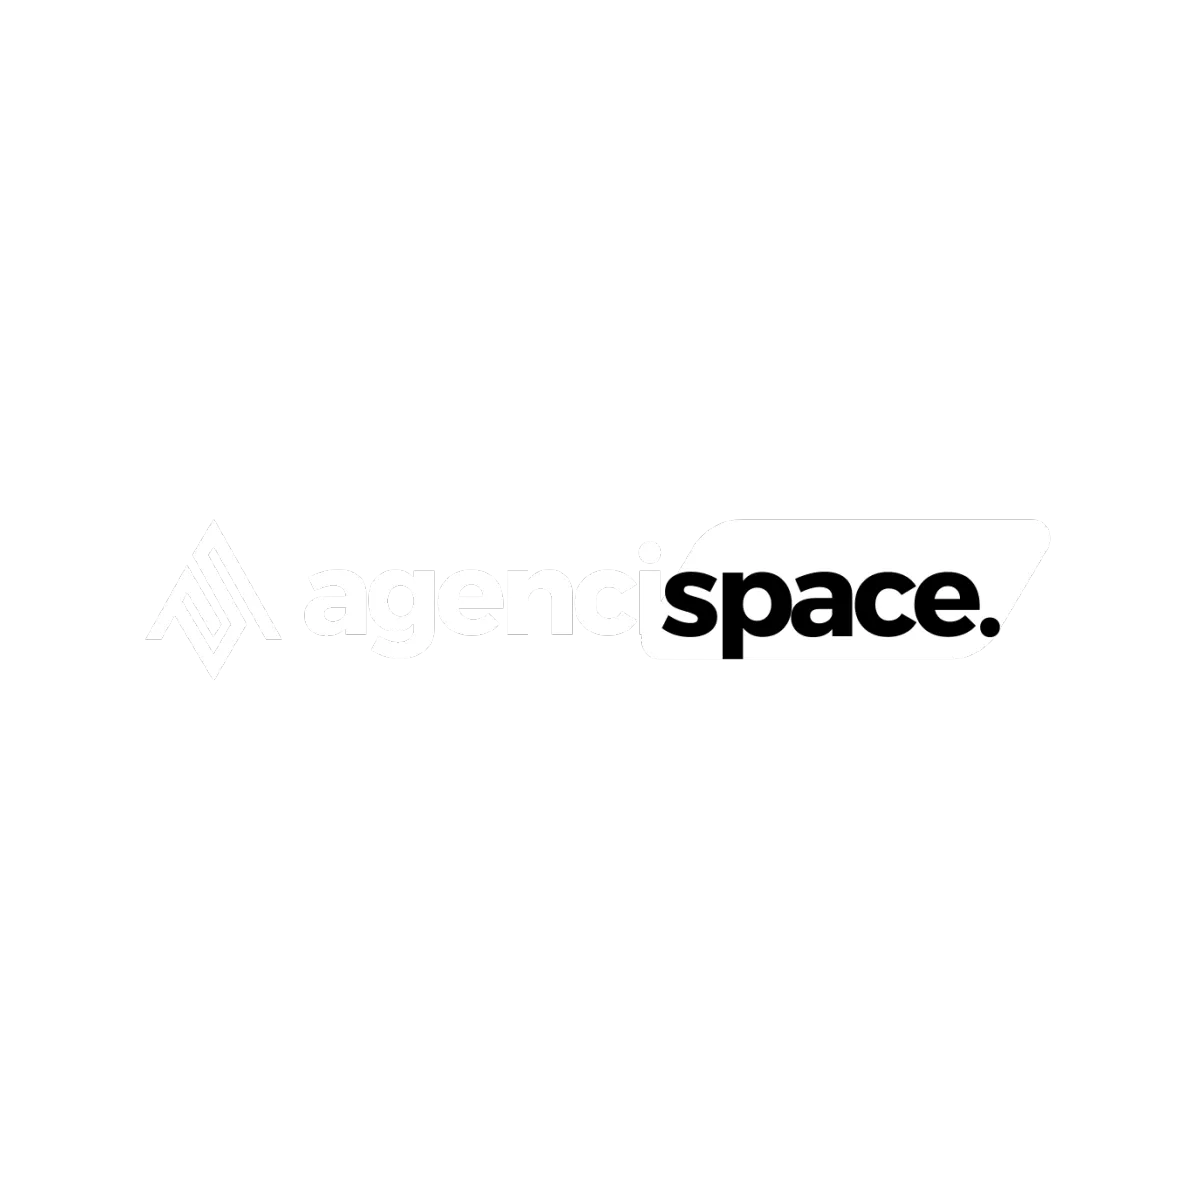 Agencispace